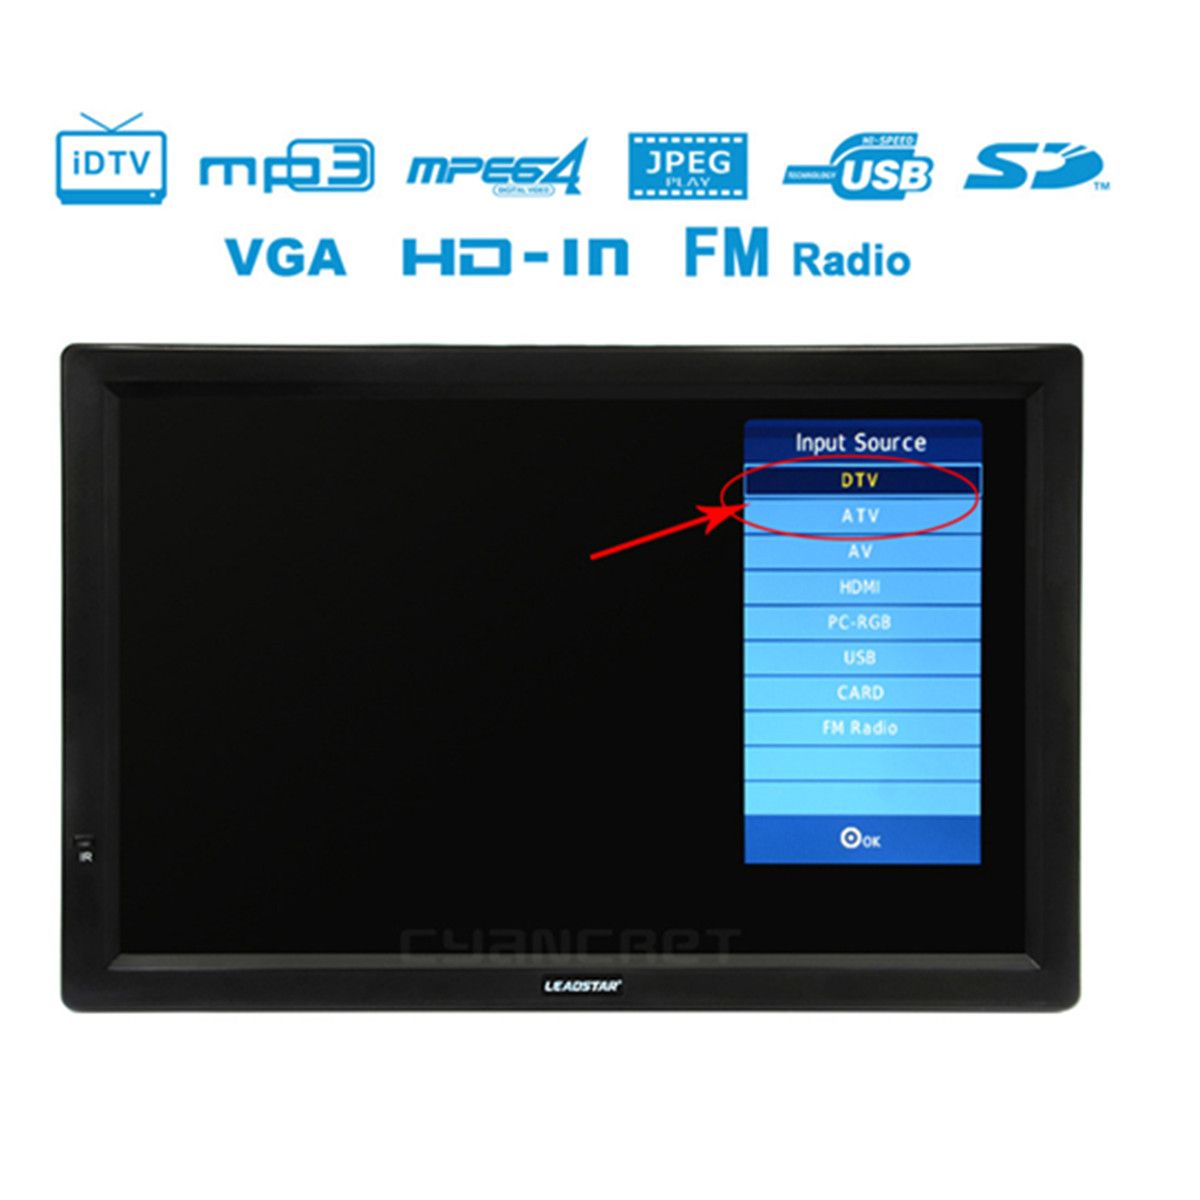 Leadstar-D14-14-inch-Portable-Digital-TFT-LED-TV-DVB-T2-ATSC-169-Analog-Television-HD-H265-Video-Pla-1629714